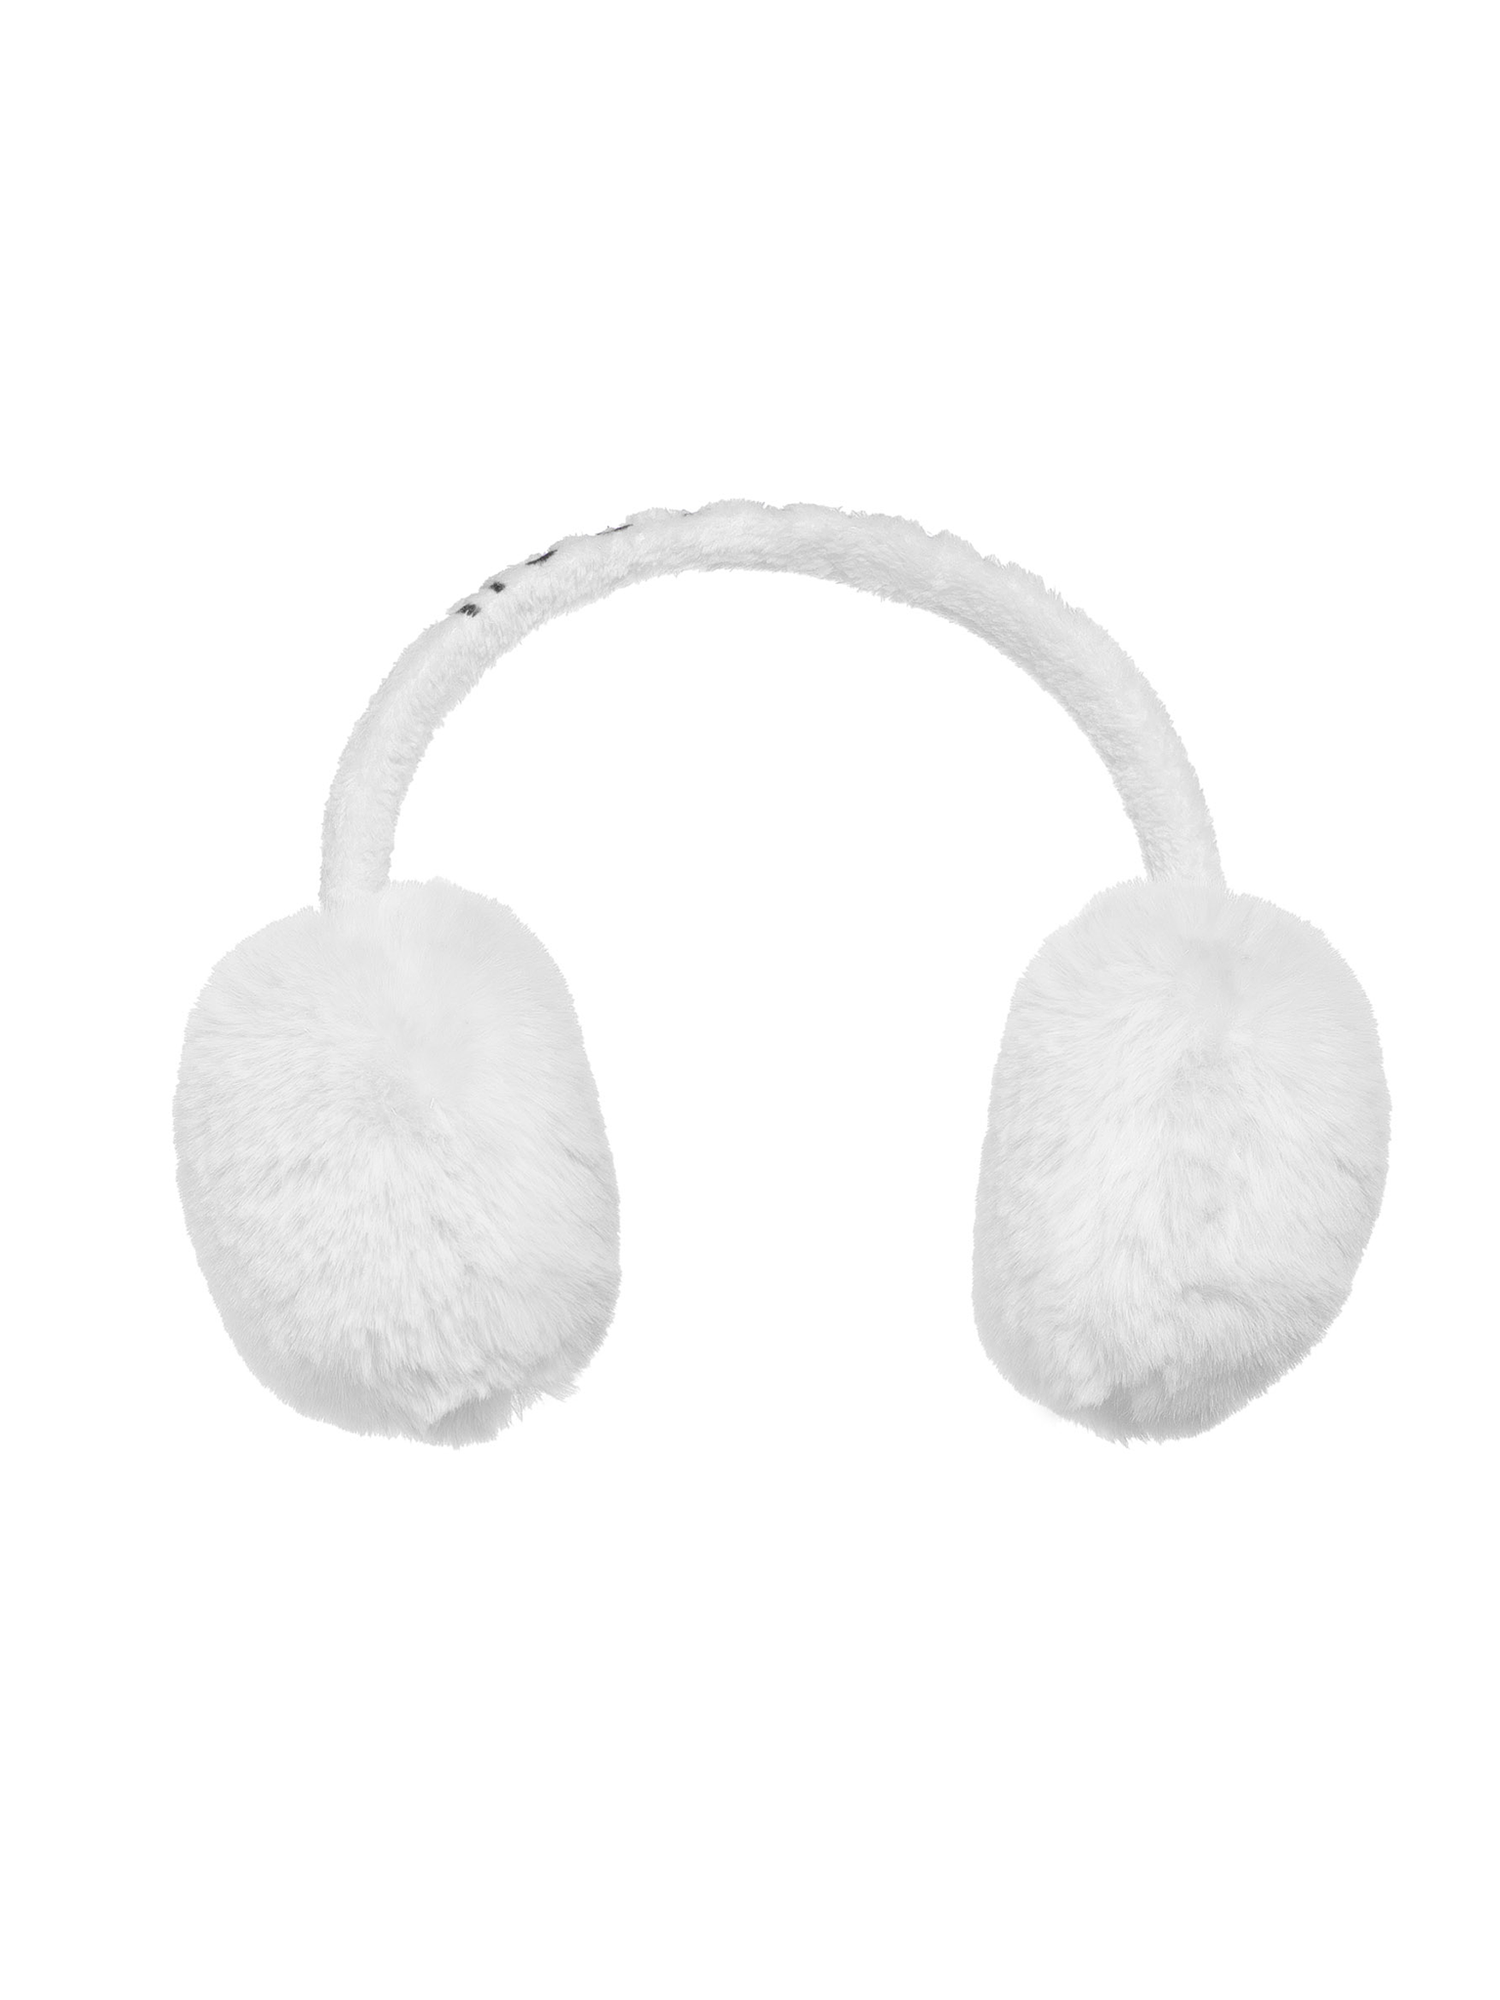 Cache oreilles fourrure blanc - Fur earmuffs white par Barts : Headict